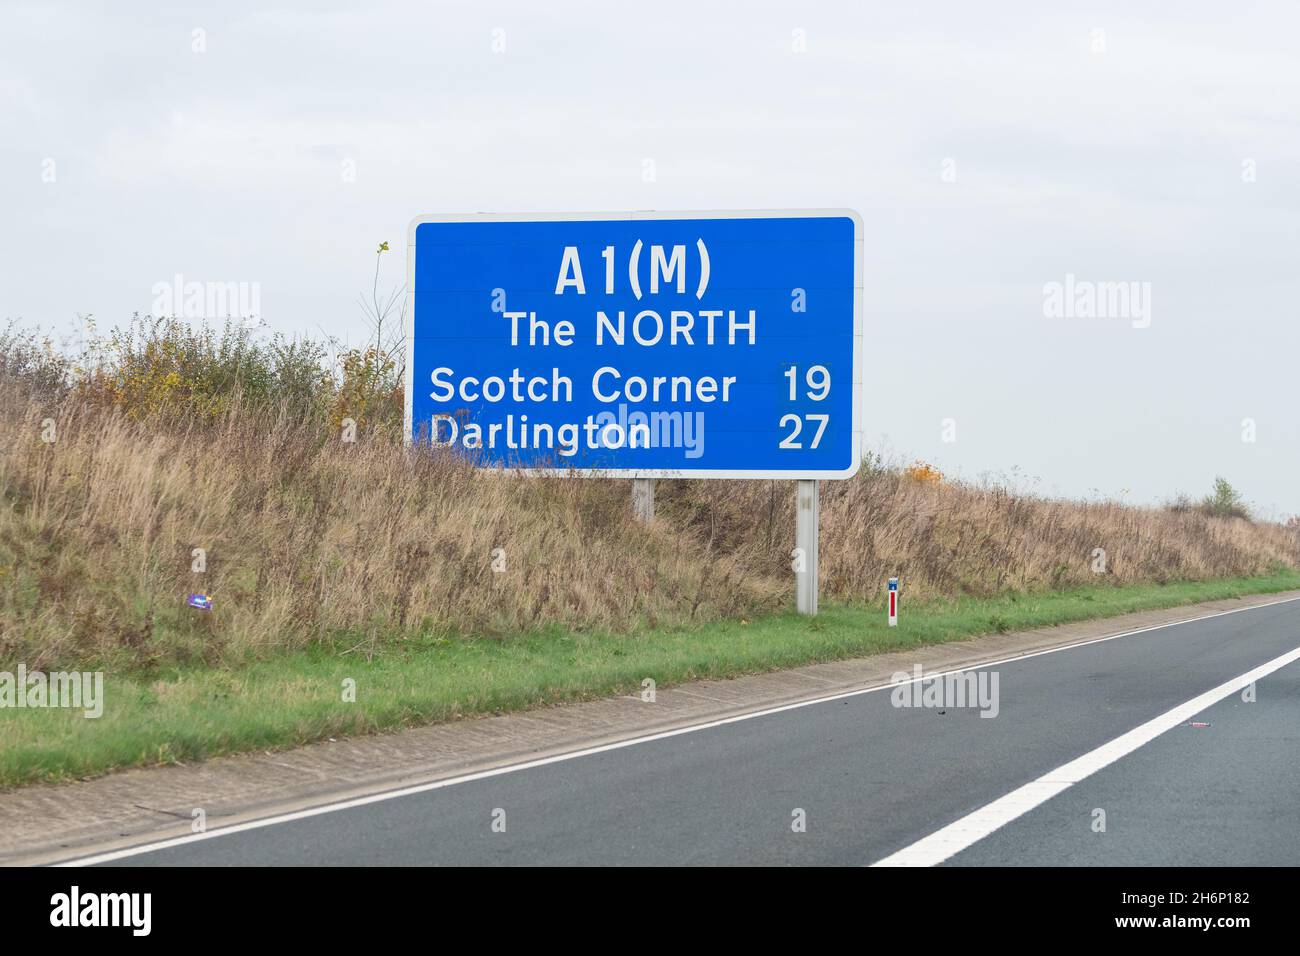 A1(M) The NORTH Scotch Corner Darlington blue motorway sign, England, UK Stock Photo